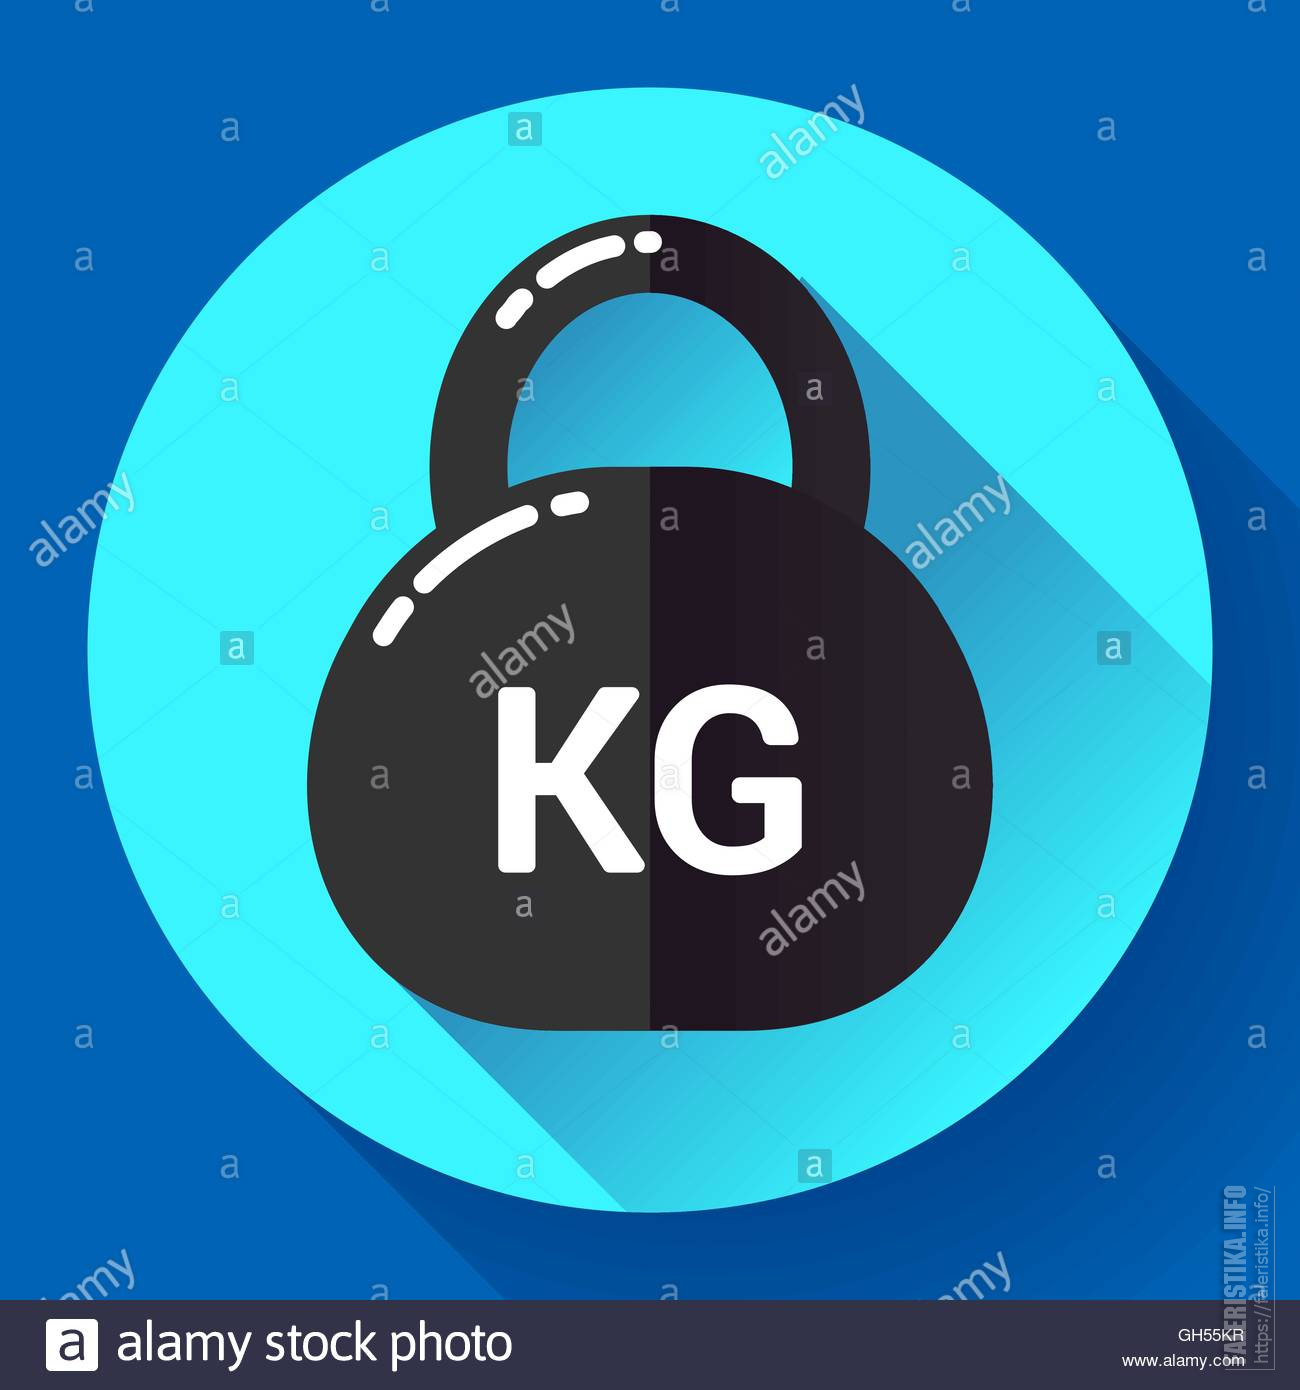 weight-icon-in-trendy-flat-style-sport-fitness-app-symbol-GH55KR.jpg